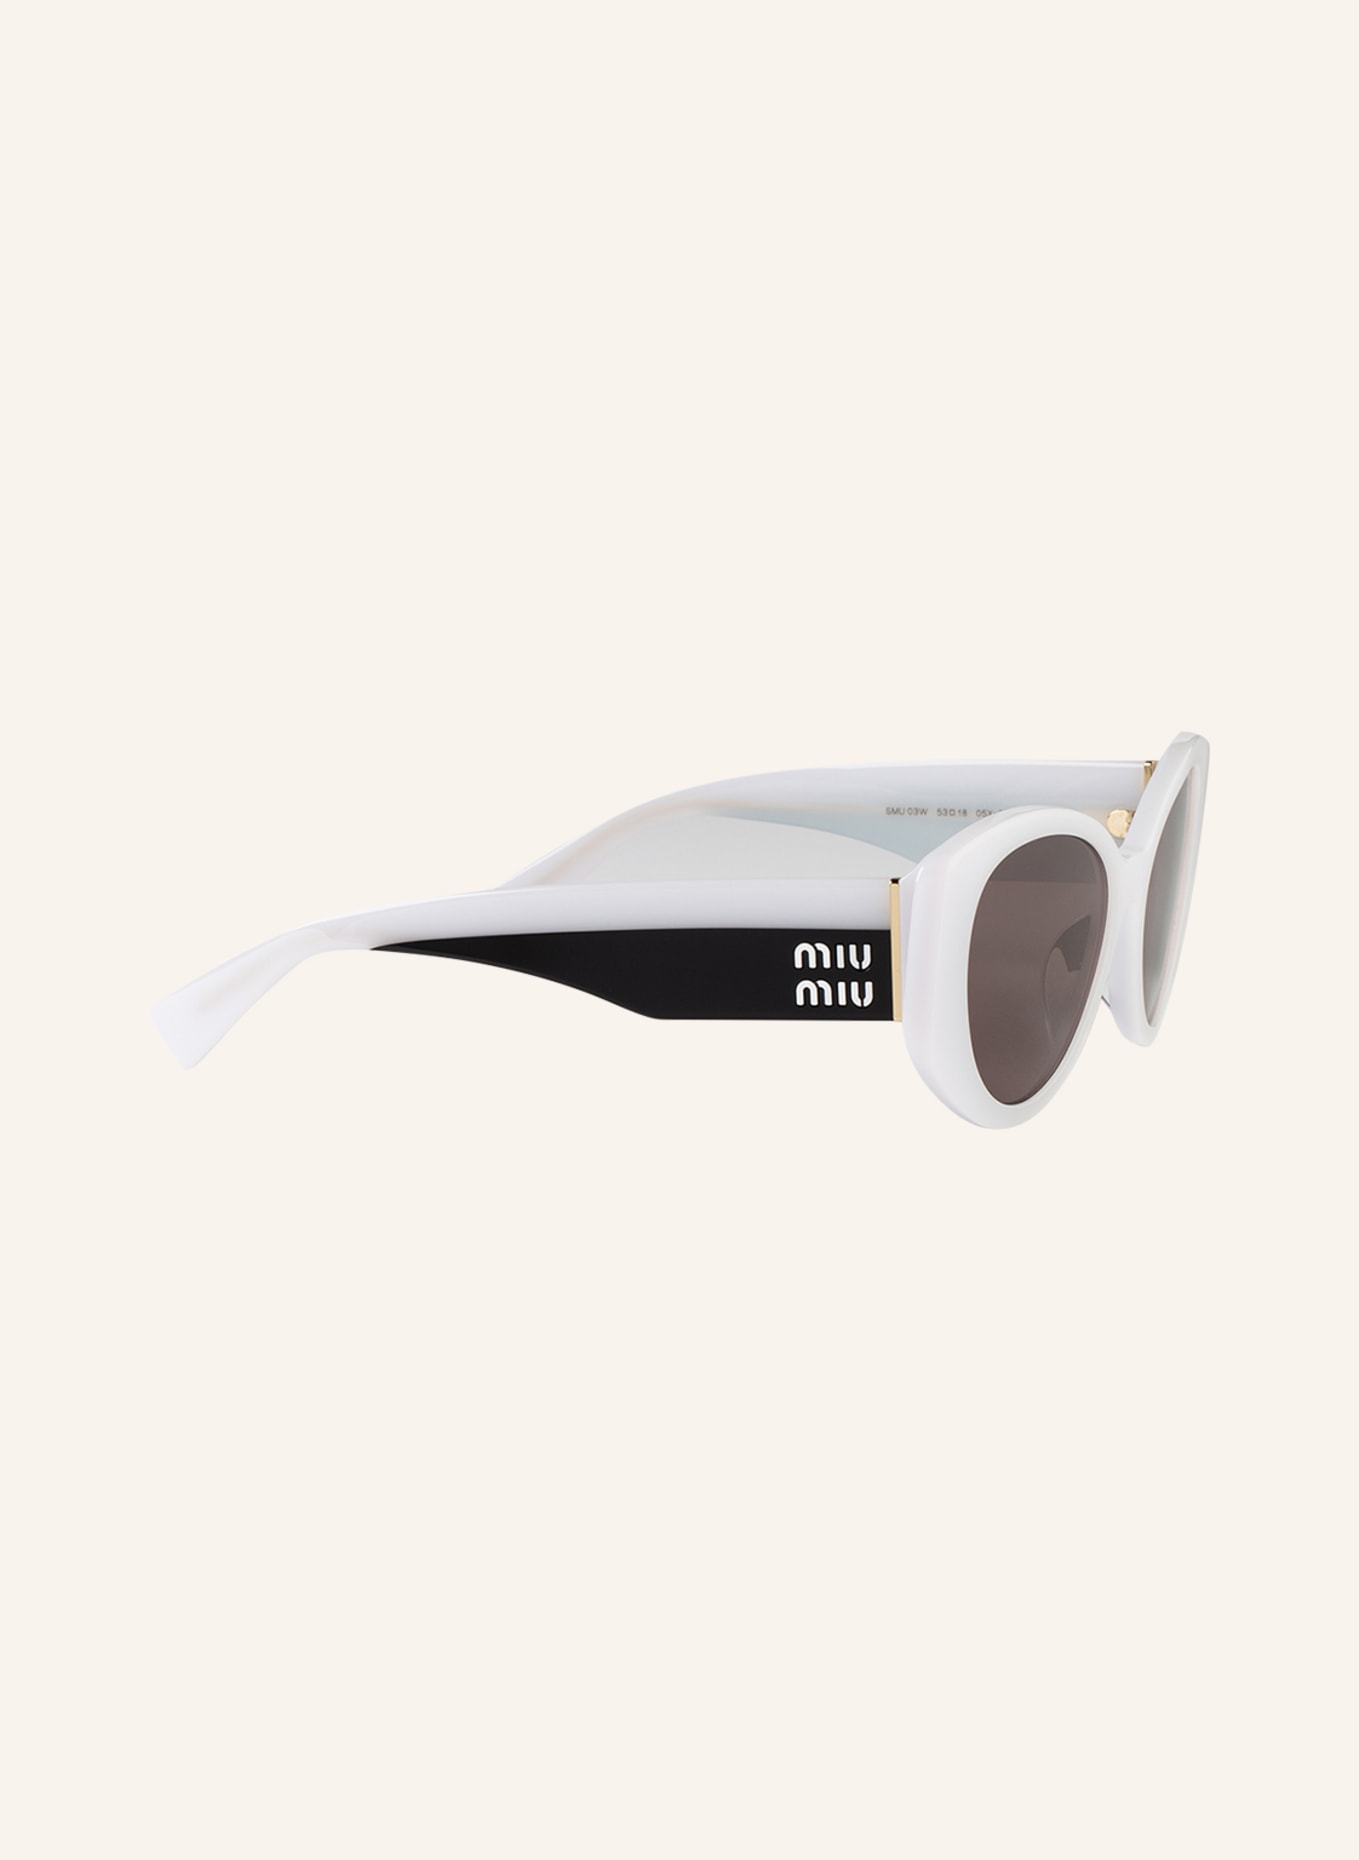 Miu Miu MU 04YS 54 Dark Grey & Black Sunglasses | Sunglass Hut USA